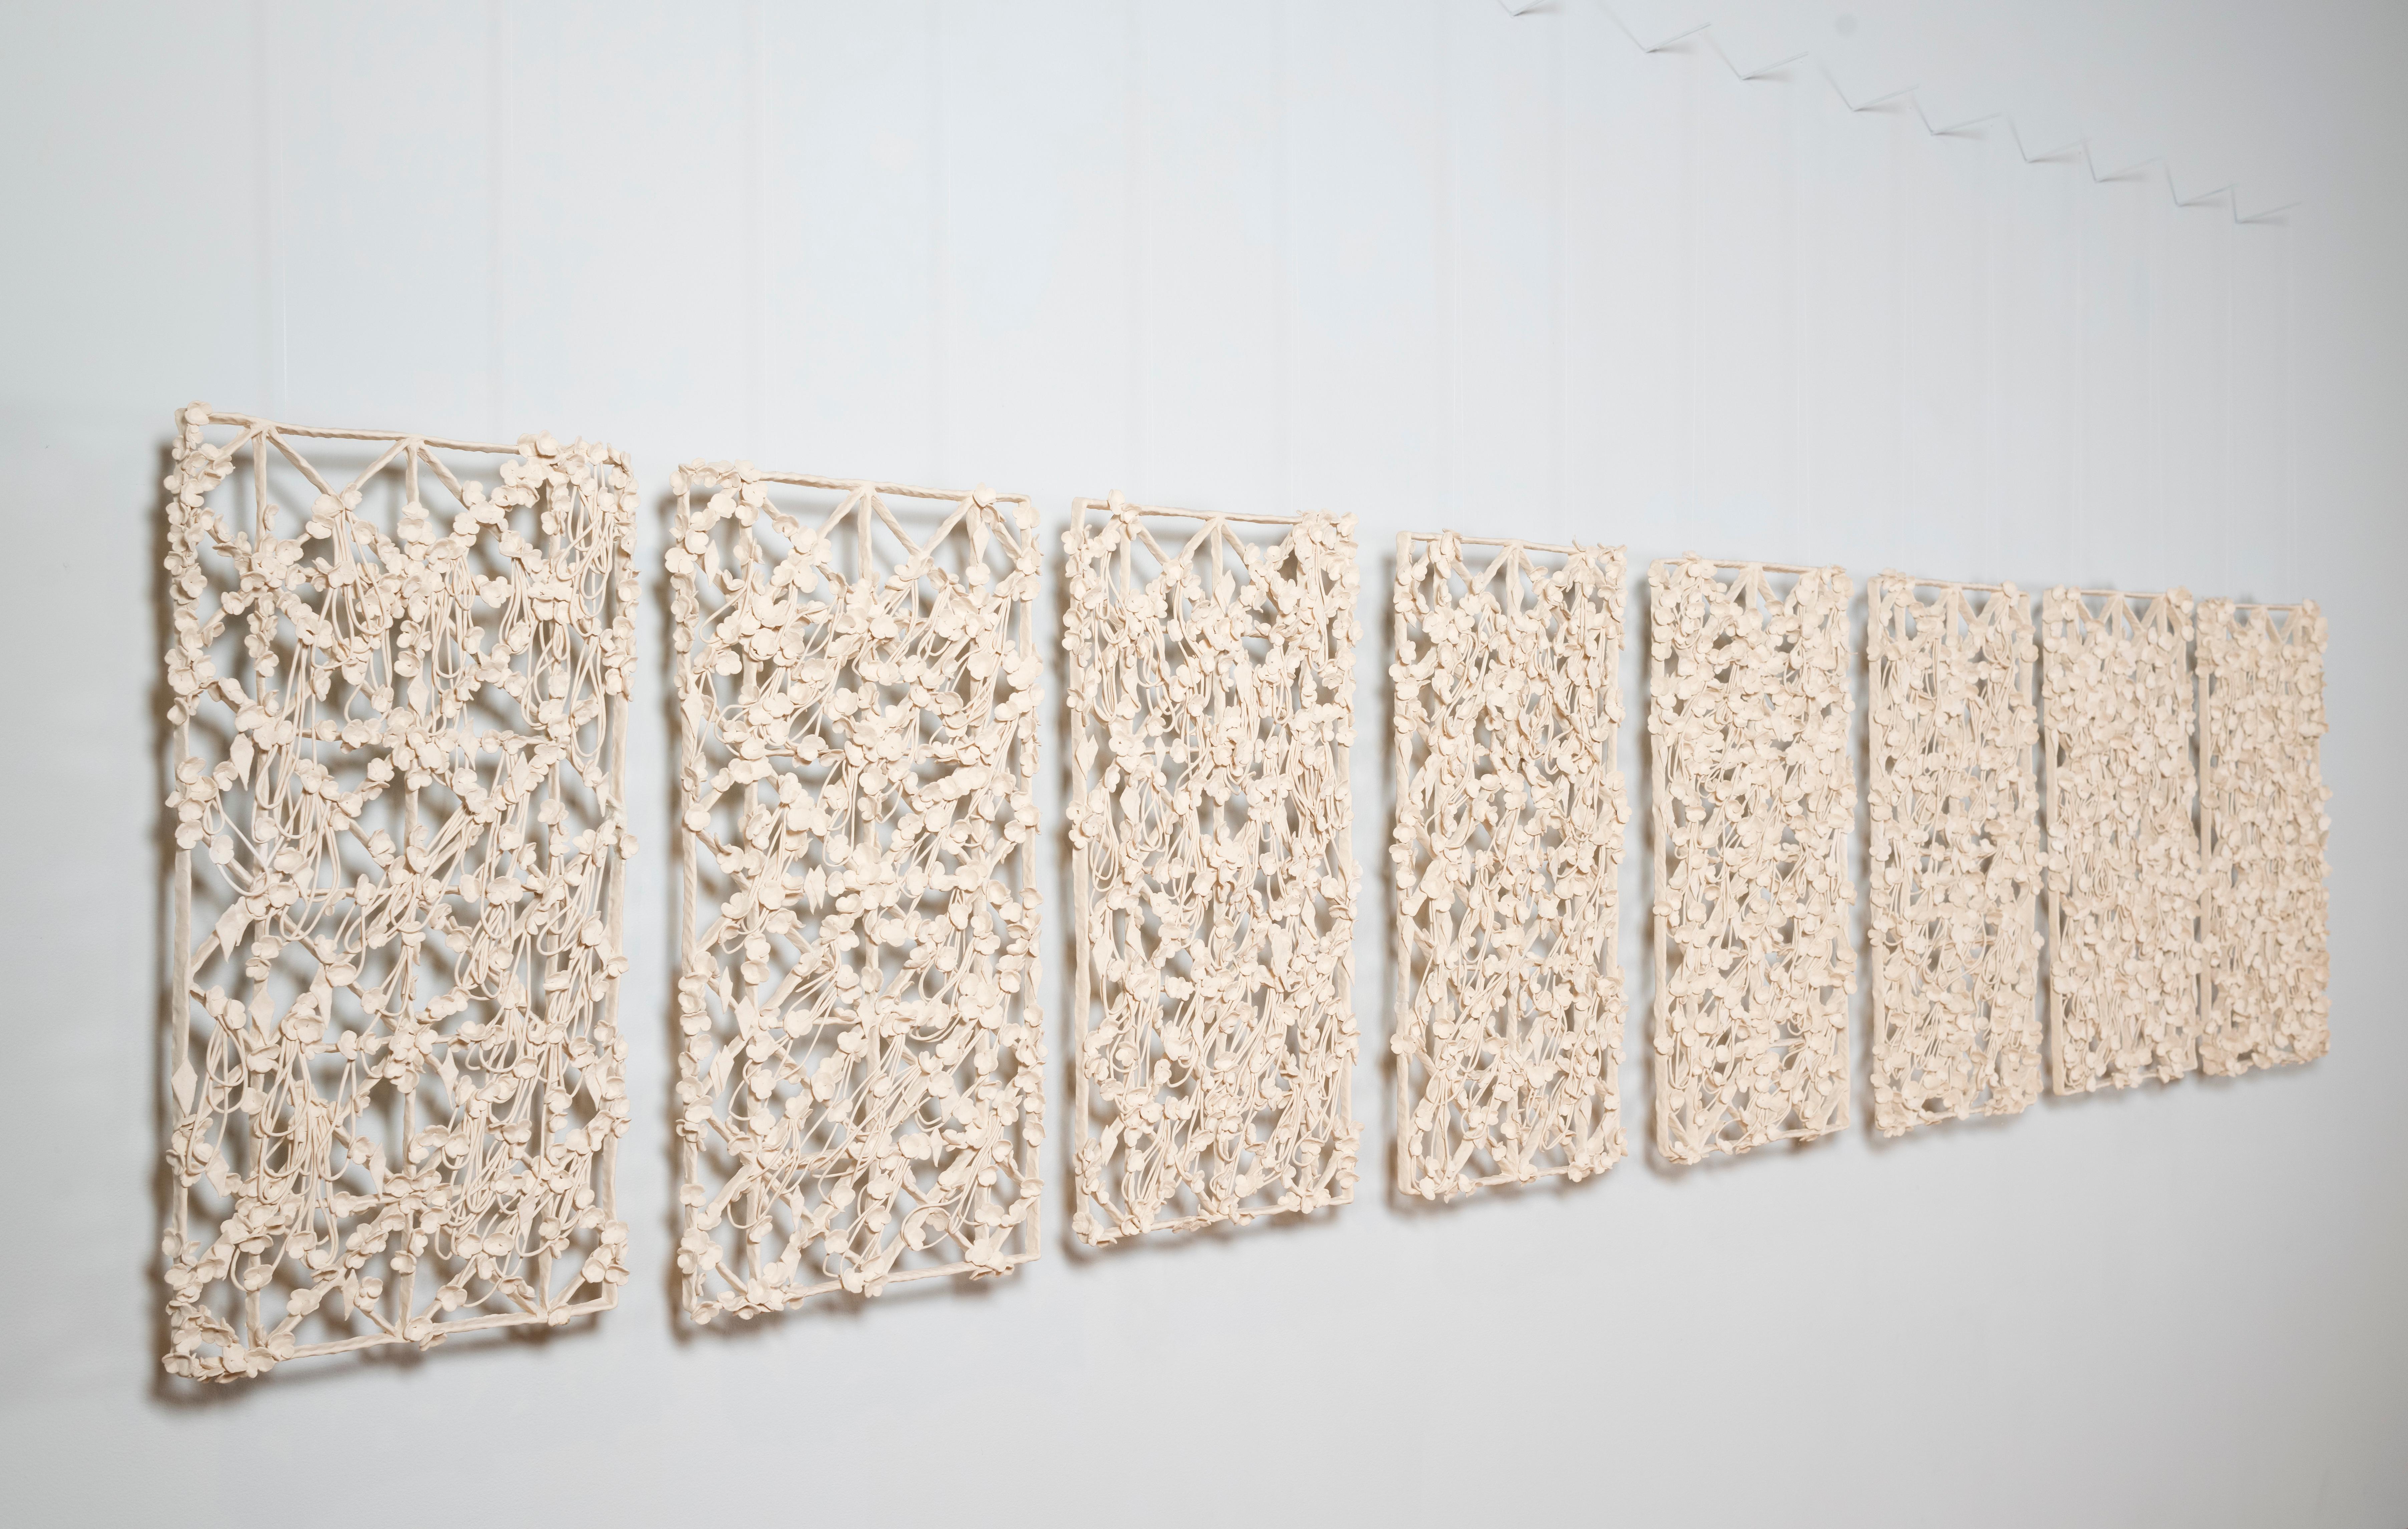 Organic Modern Joanna Poag Binding Time (Lattice Structure w/ Quatrefoil) Wall Panel Sculptures For Sale